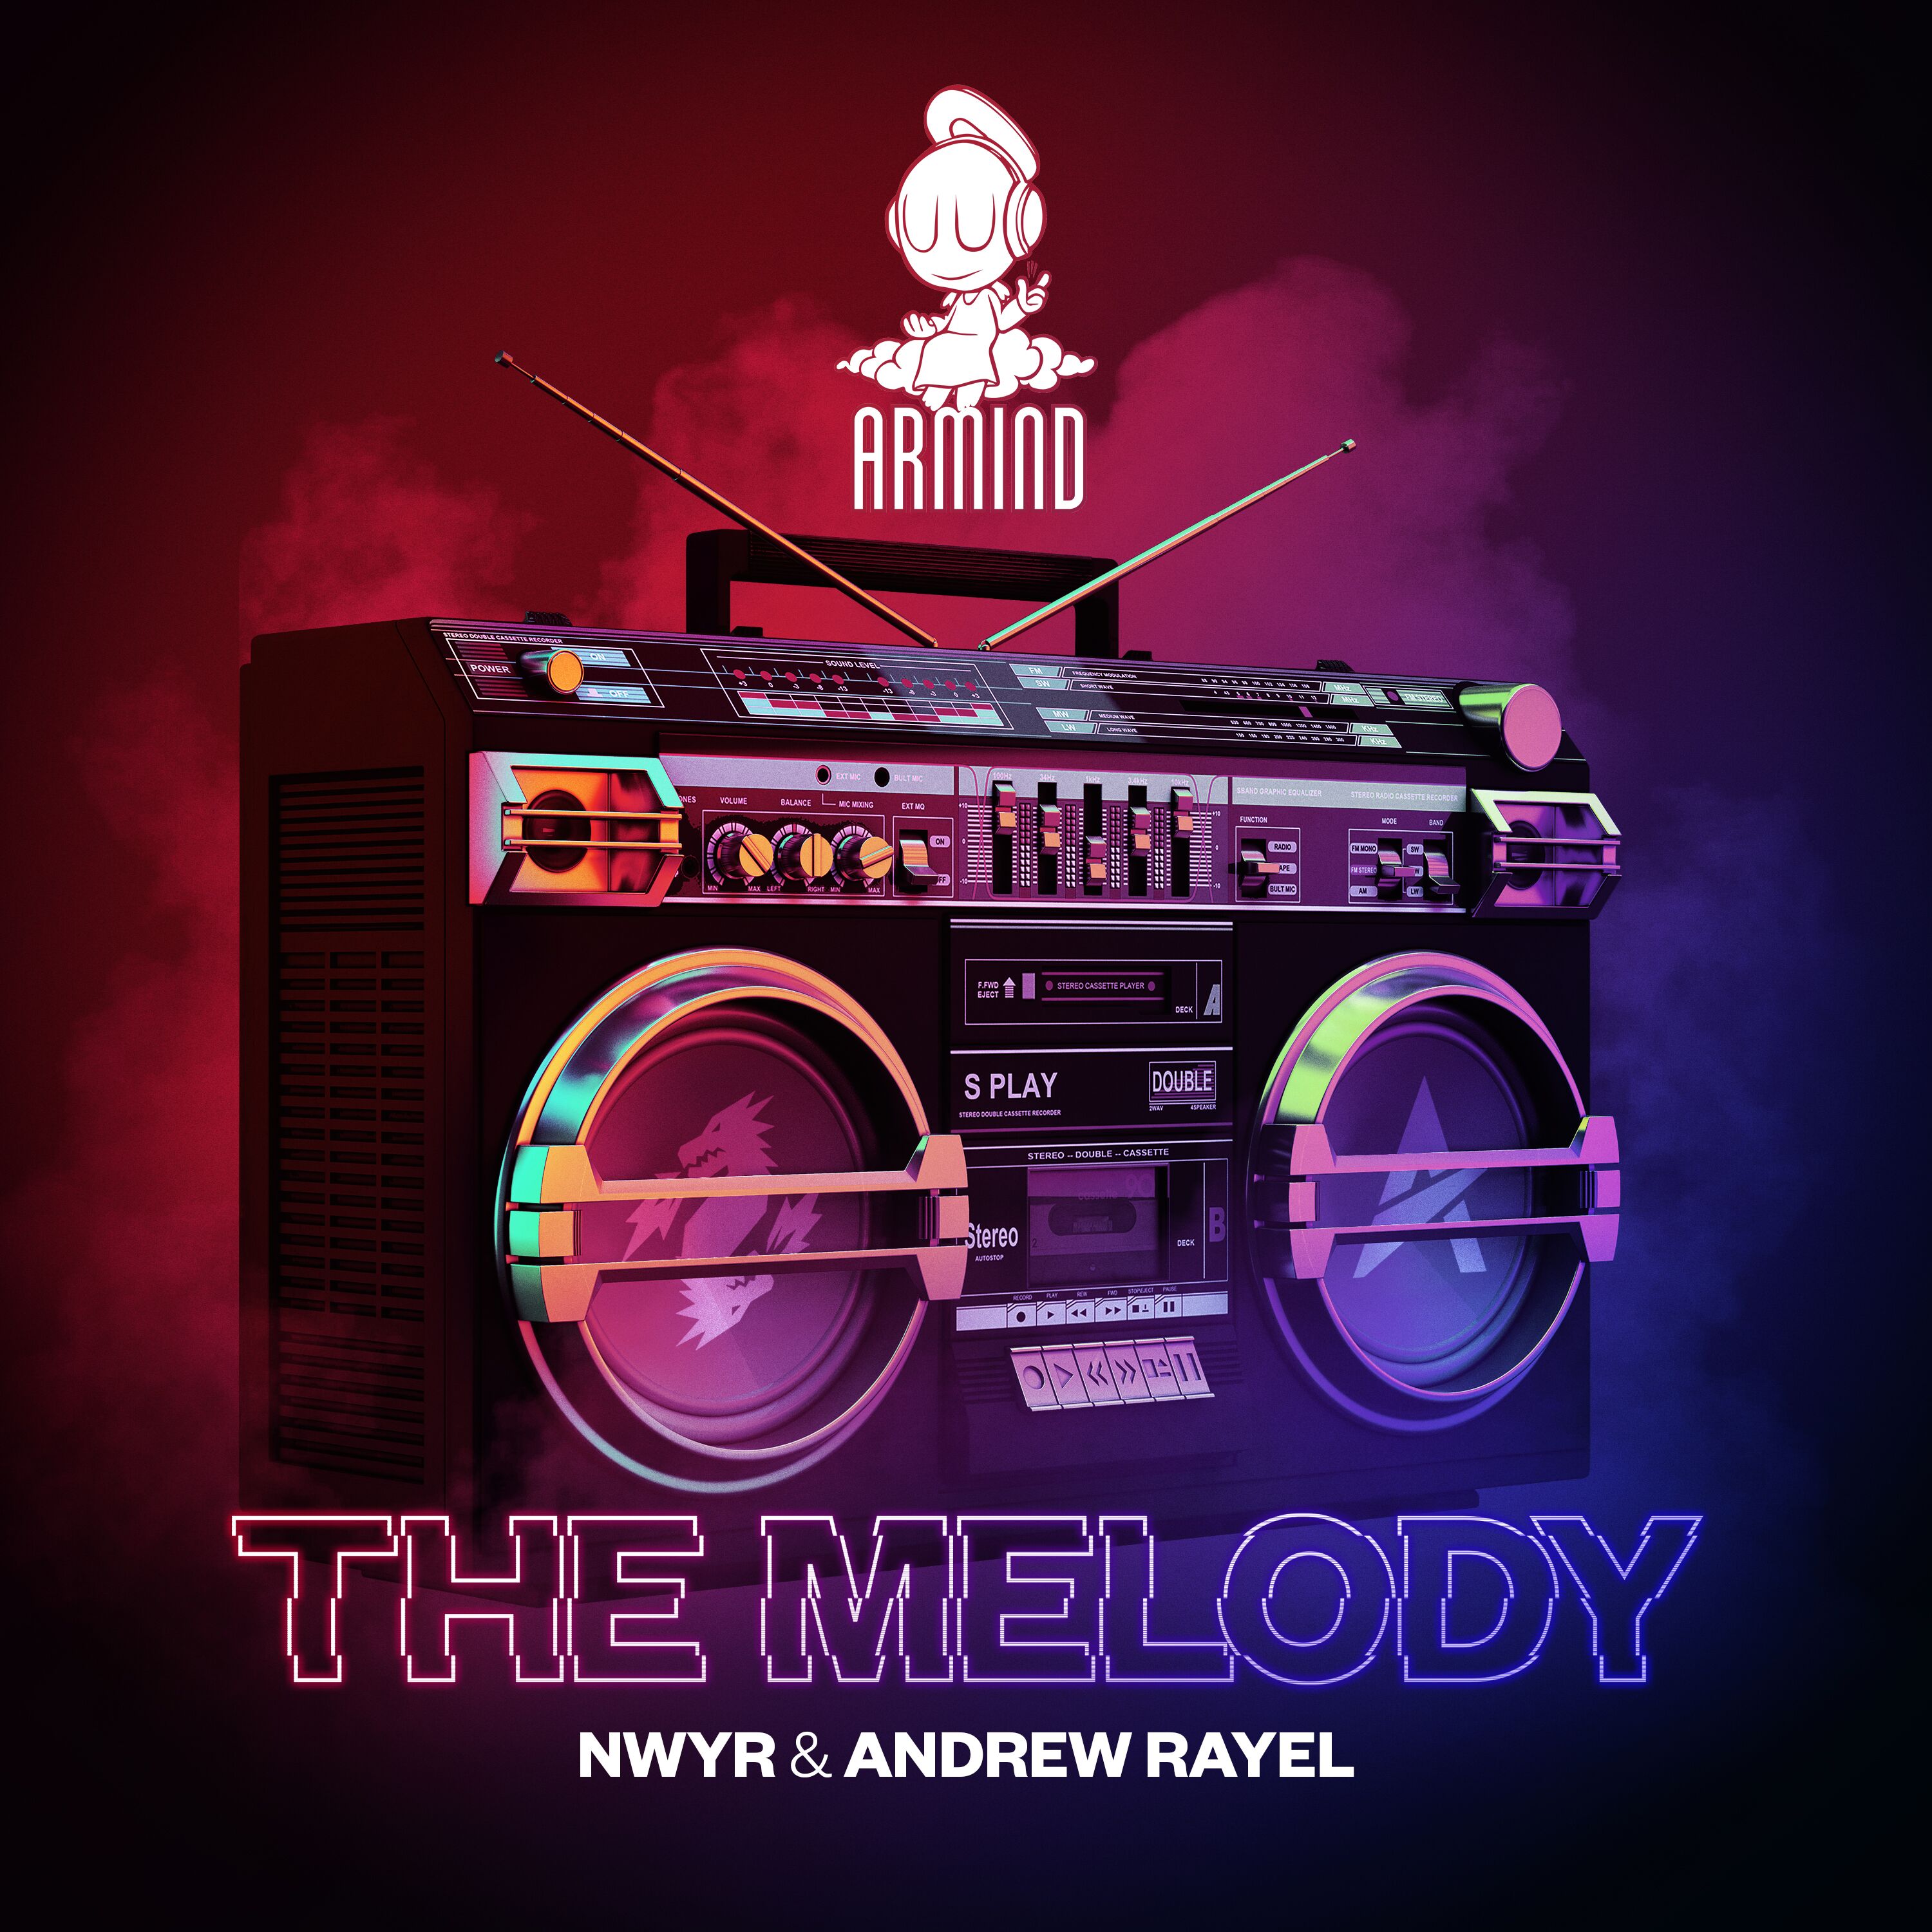 NWYR x Andrew Rayel presents The Melody on Armind